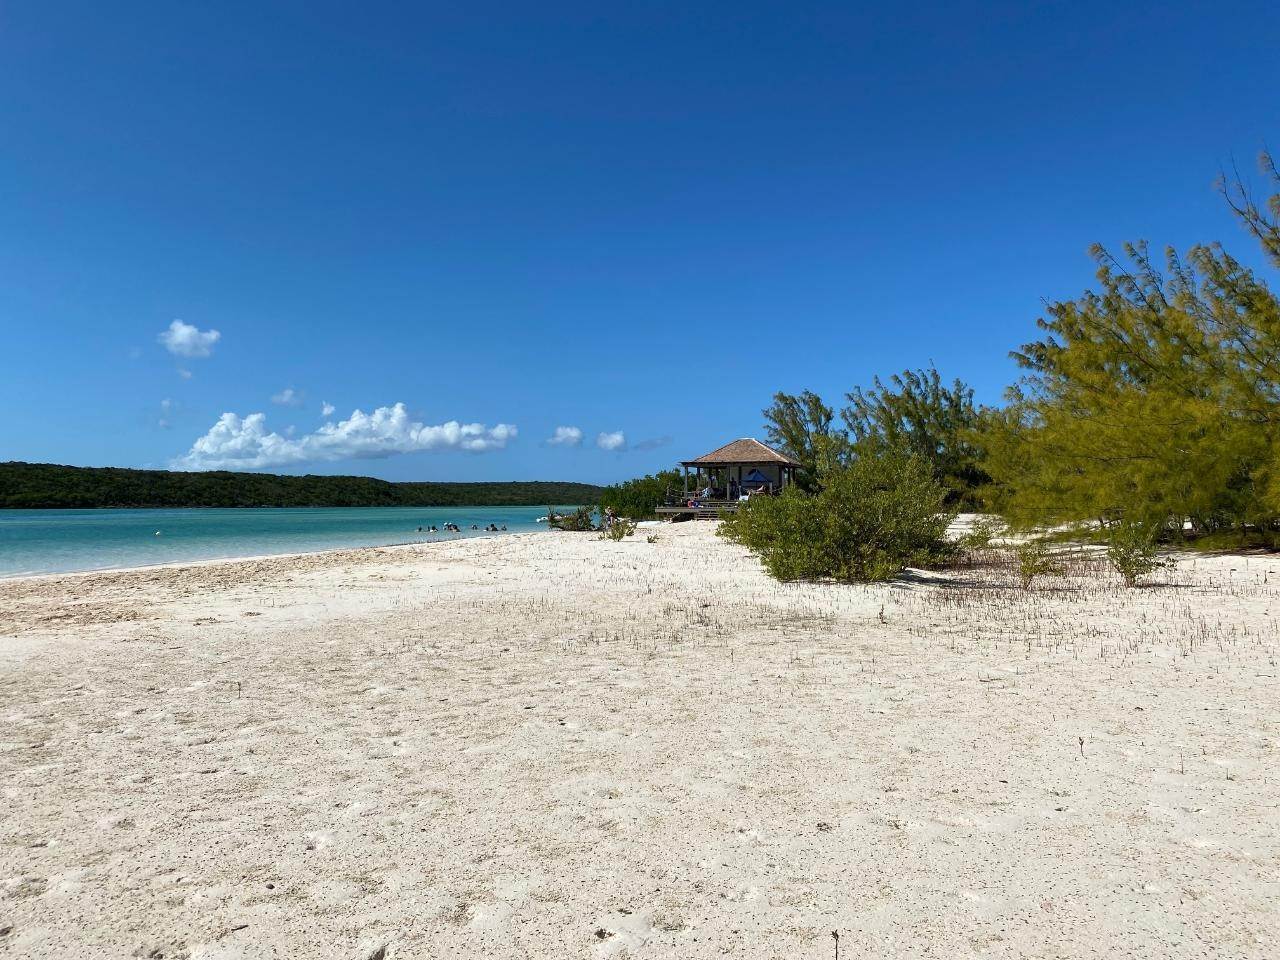 10. Lots / Acreage for Sale at Windermere Island, Eleuthera, Bahamas